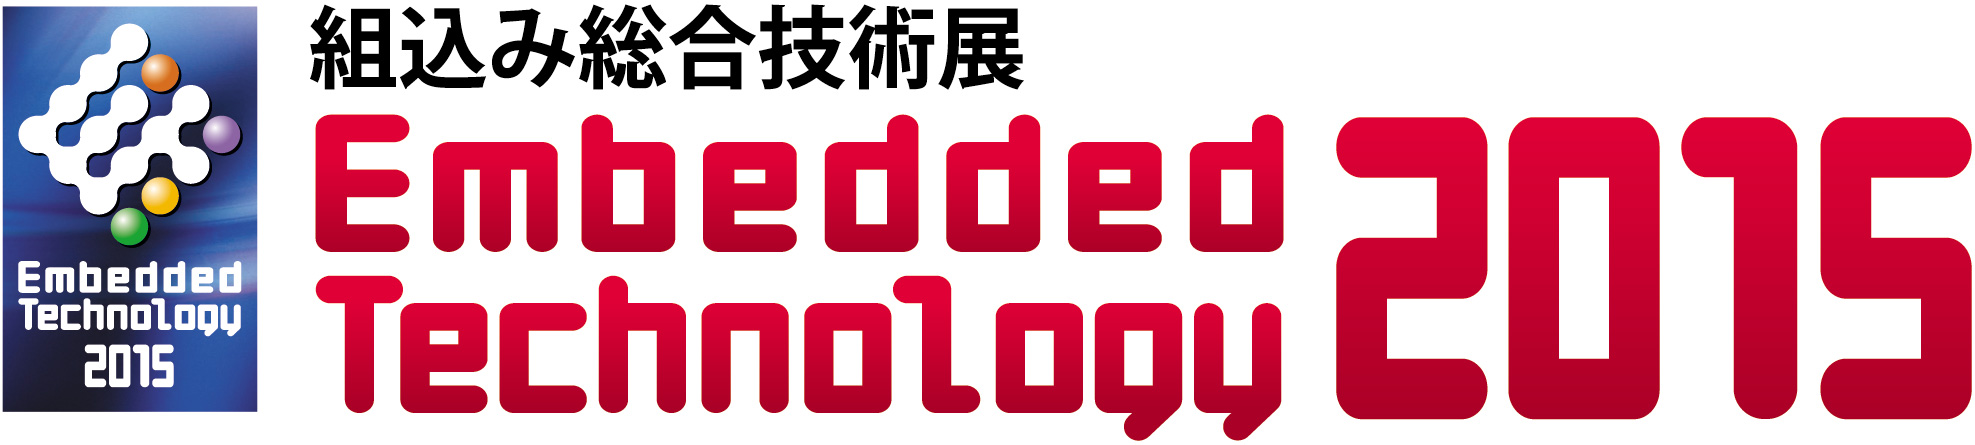 Embedded Technology 2015